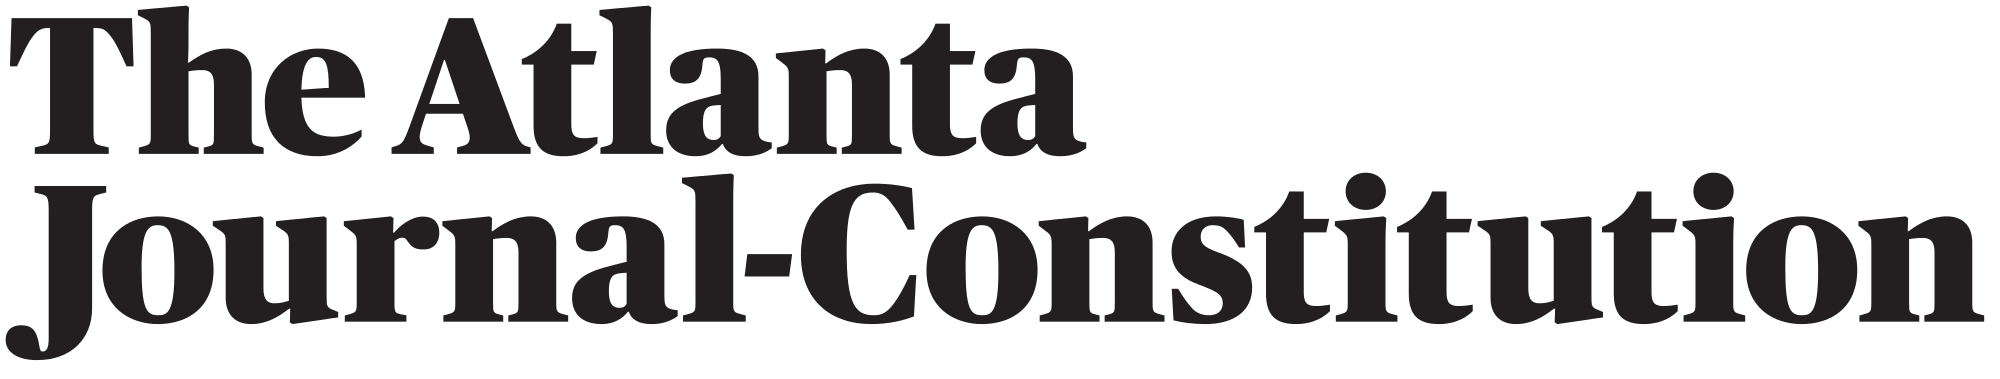 Atlanta Newspaper Logo - File:The Atlanta Journal-Constitution logo.svg - Wikimedia Commons